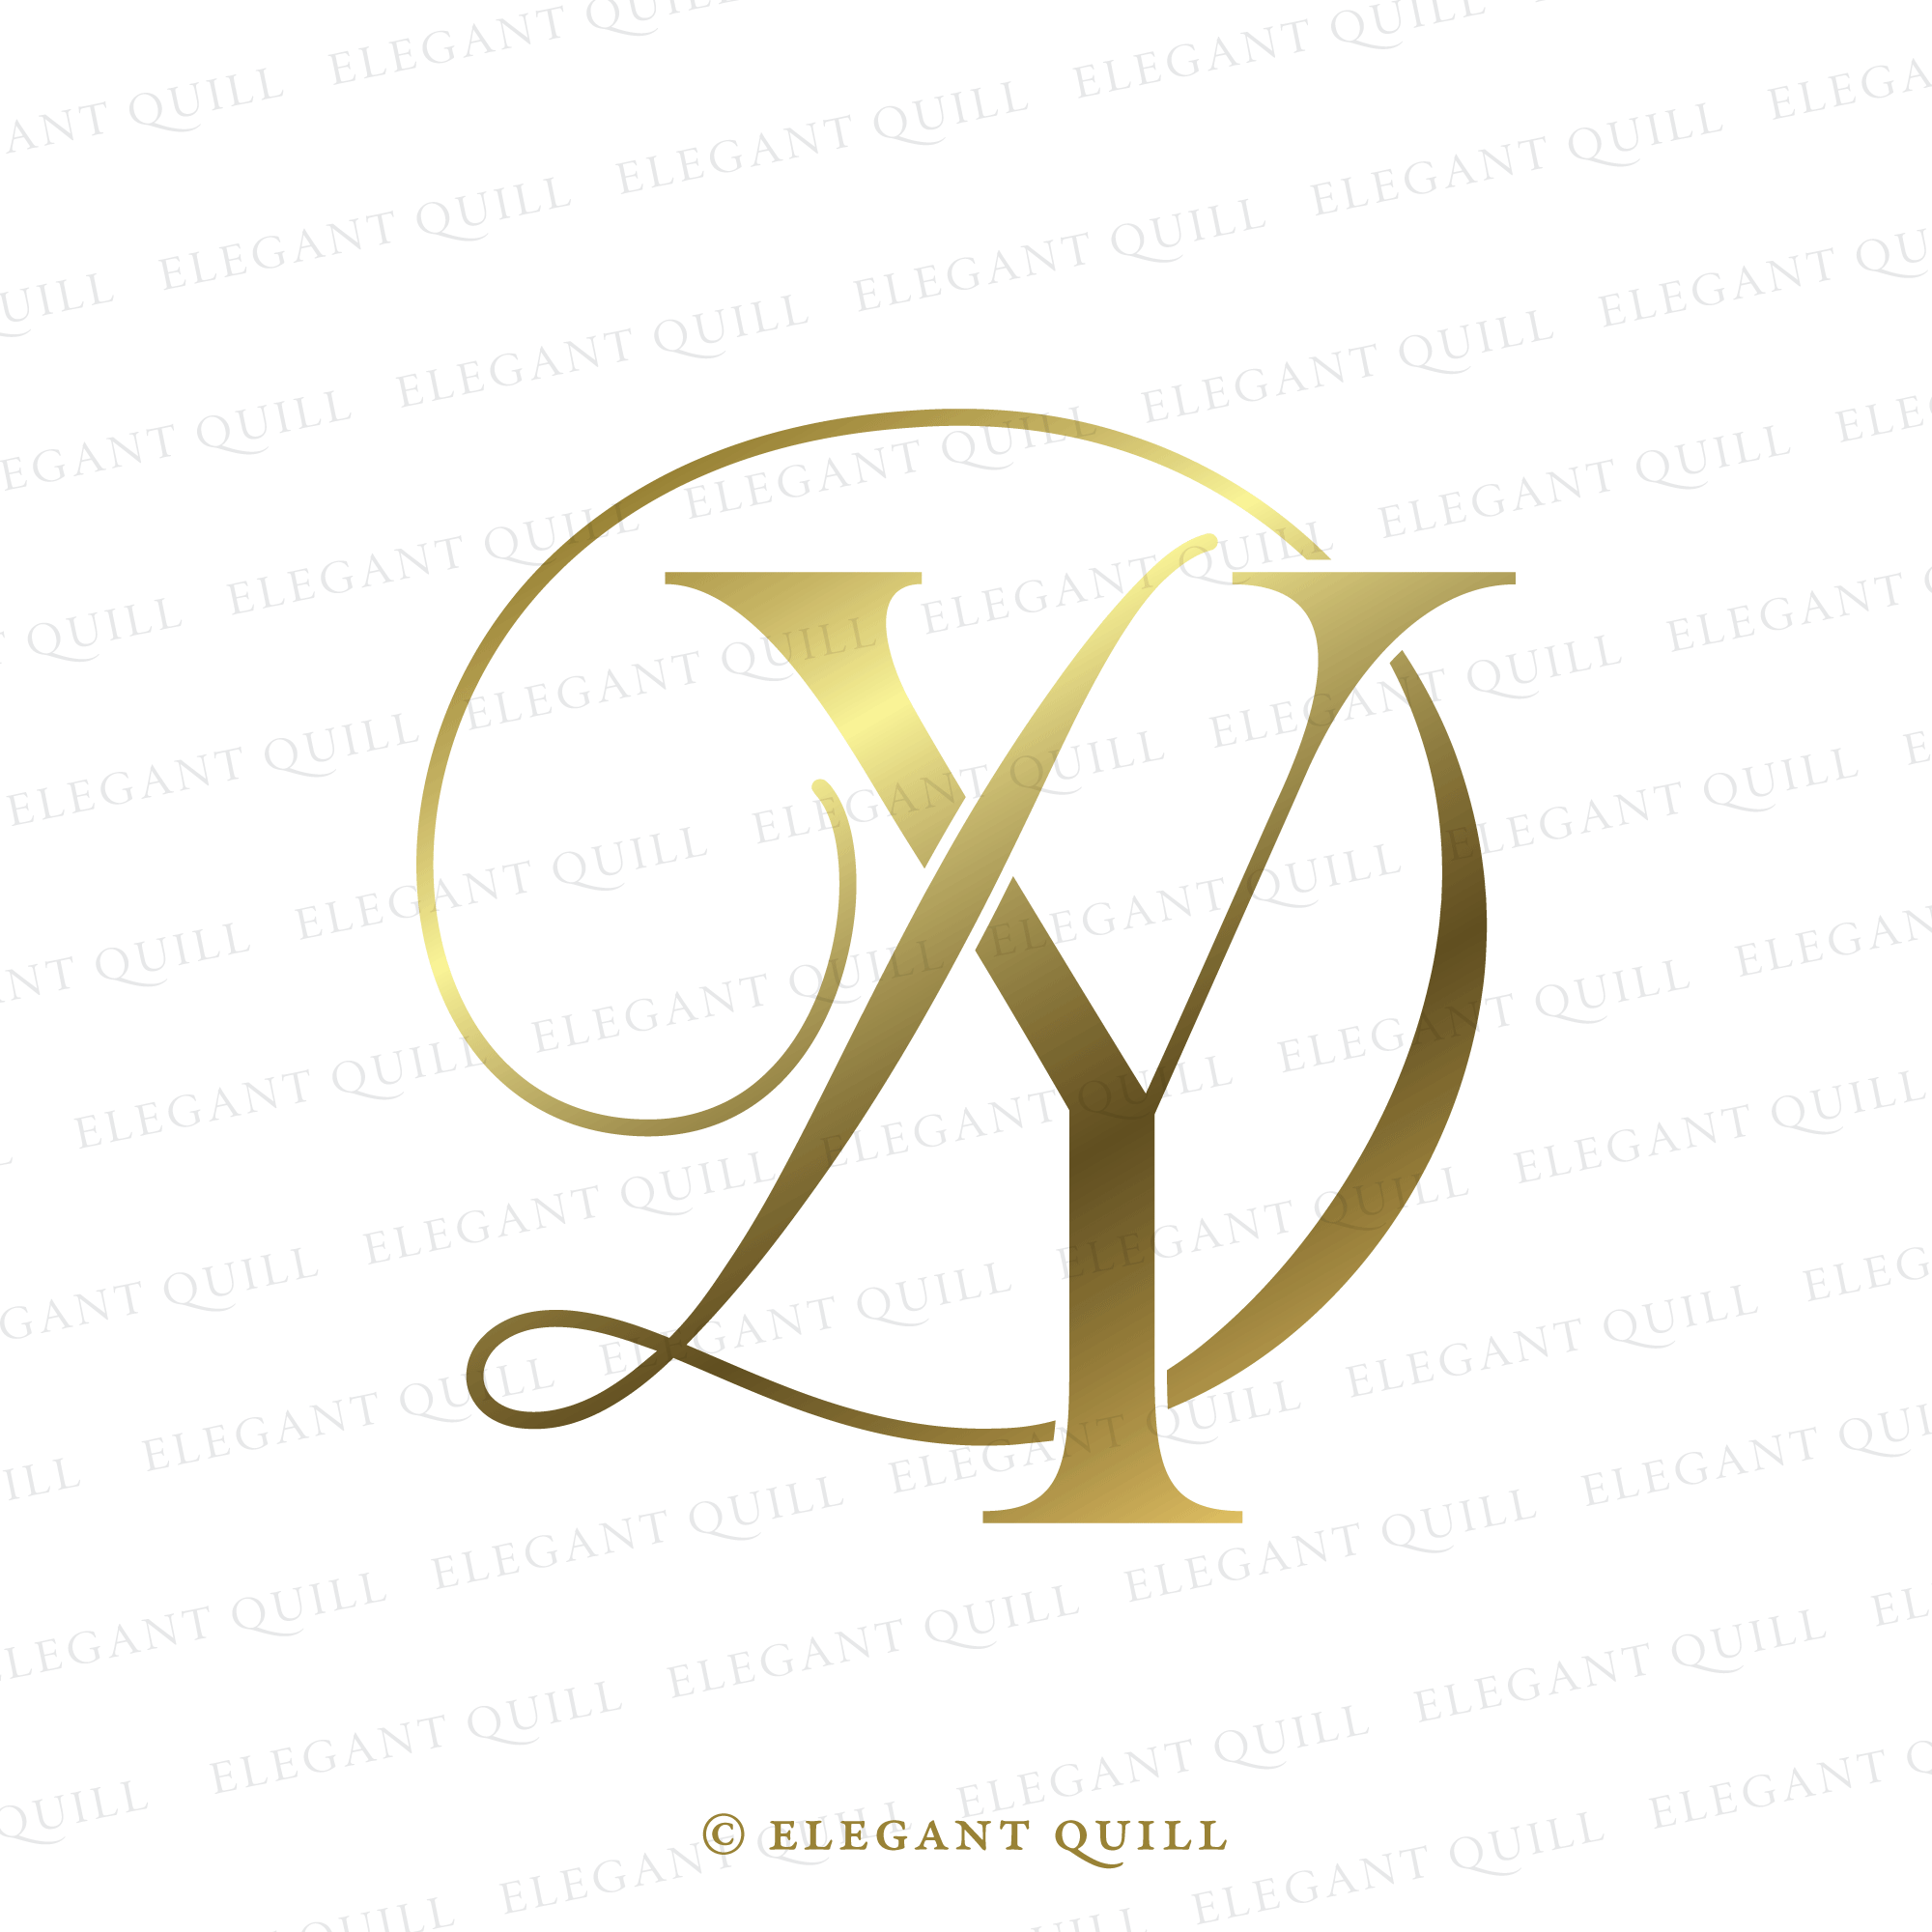 Logo for the gold king | Logo design contest | 99designs